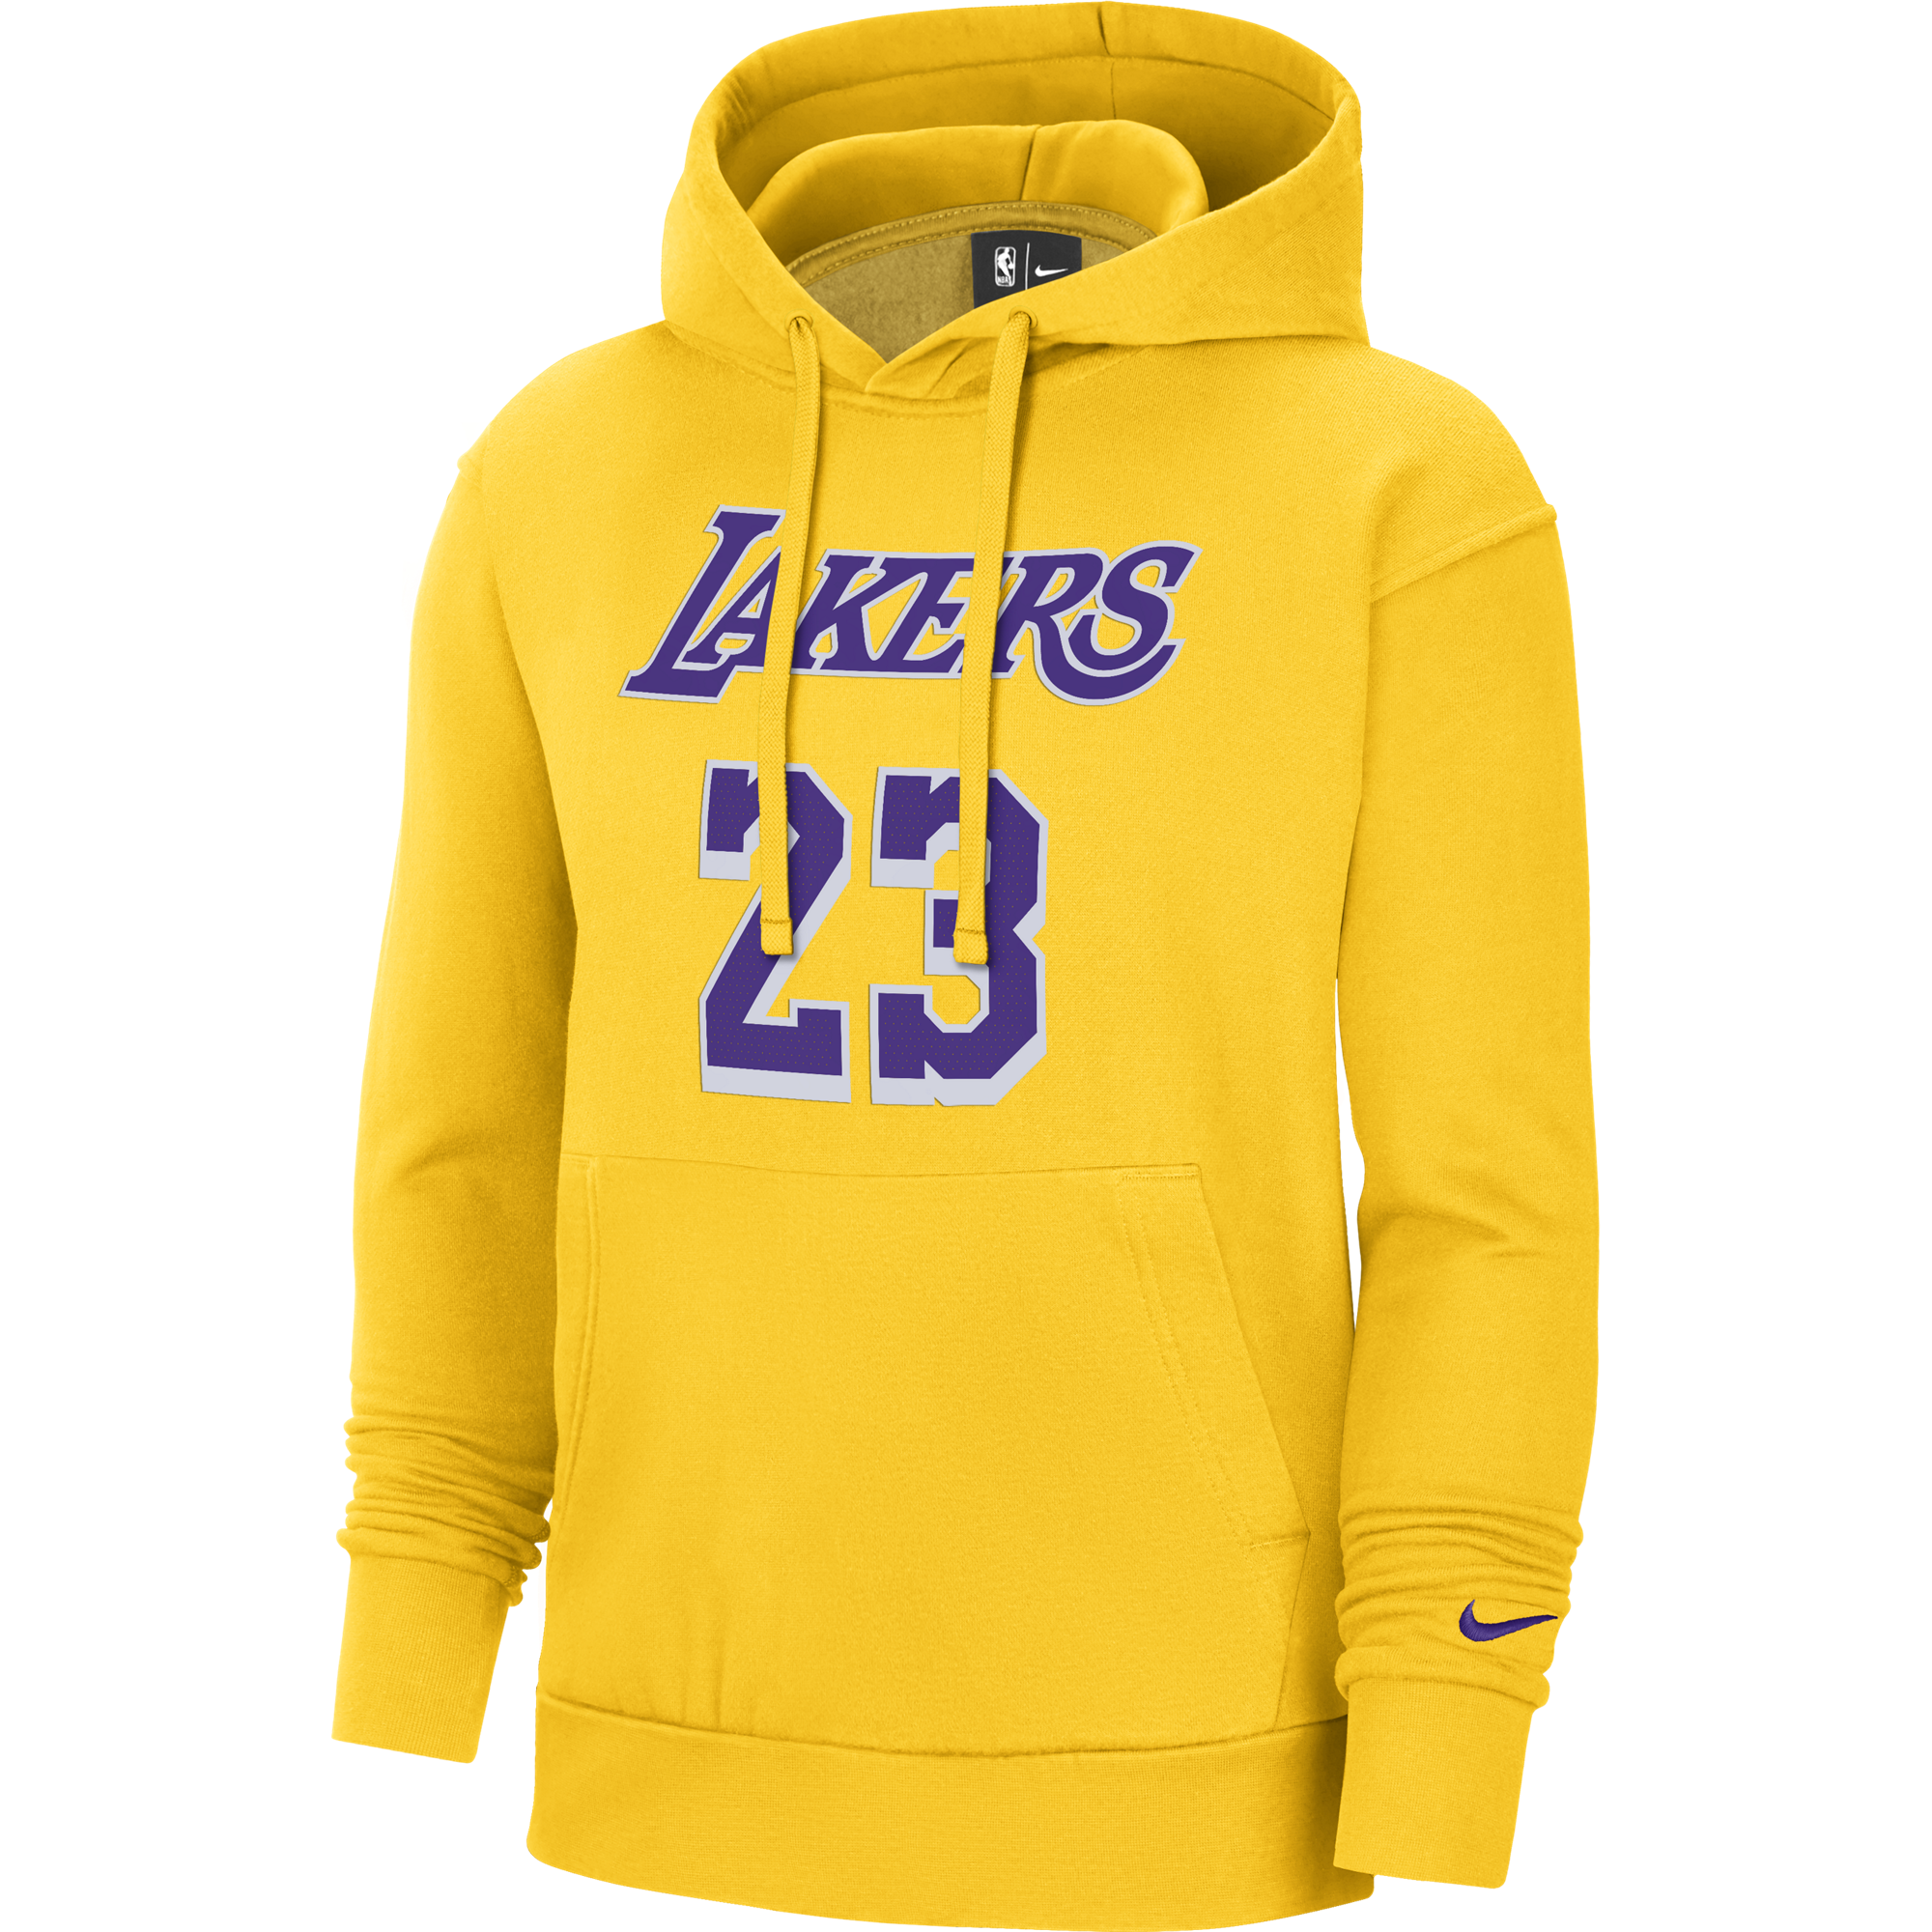 Los Angeles Lakers NBA sweatshirt - Tracksuits - CLOTHING - Woman